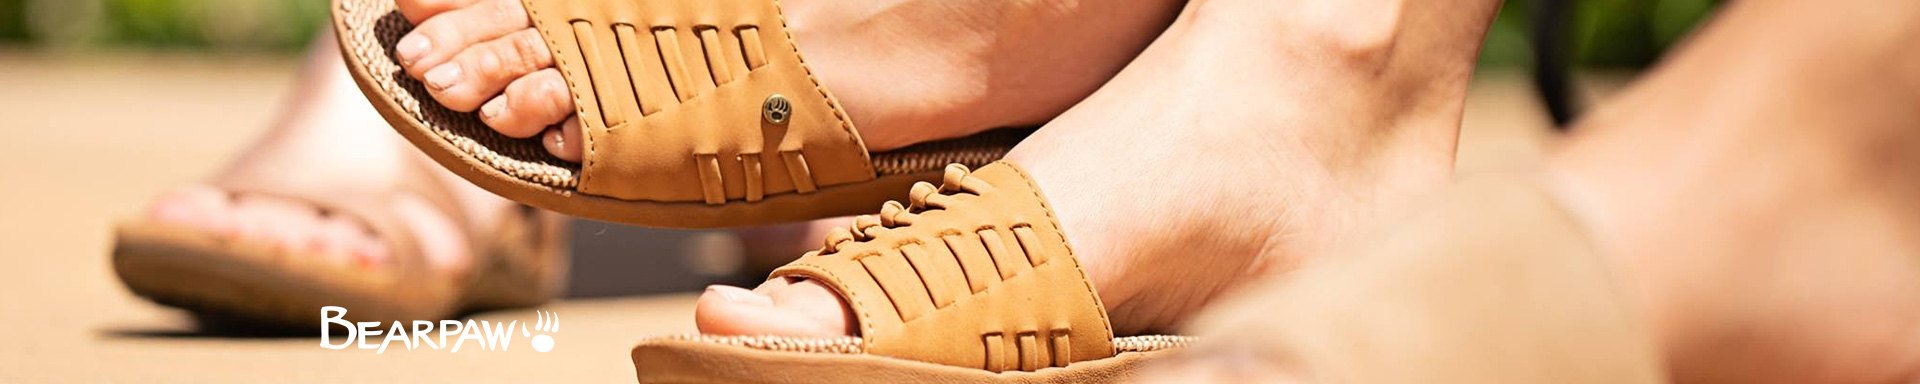 Bearpaw Sandals